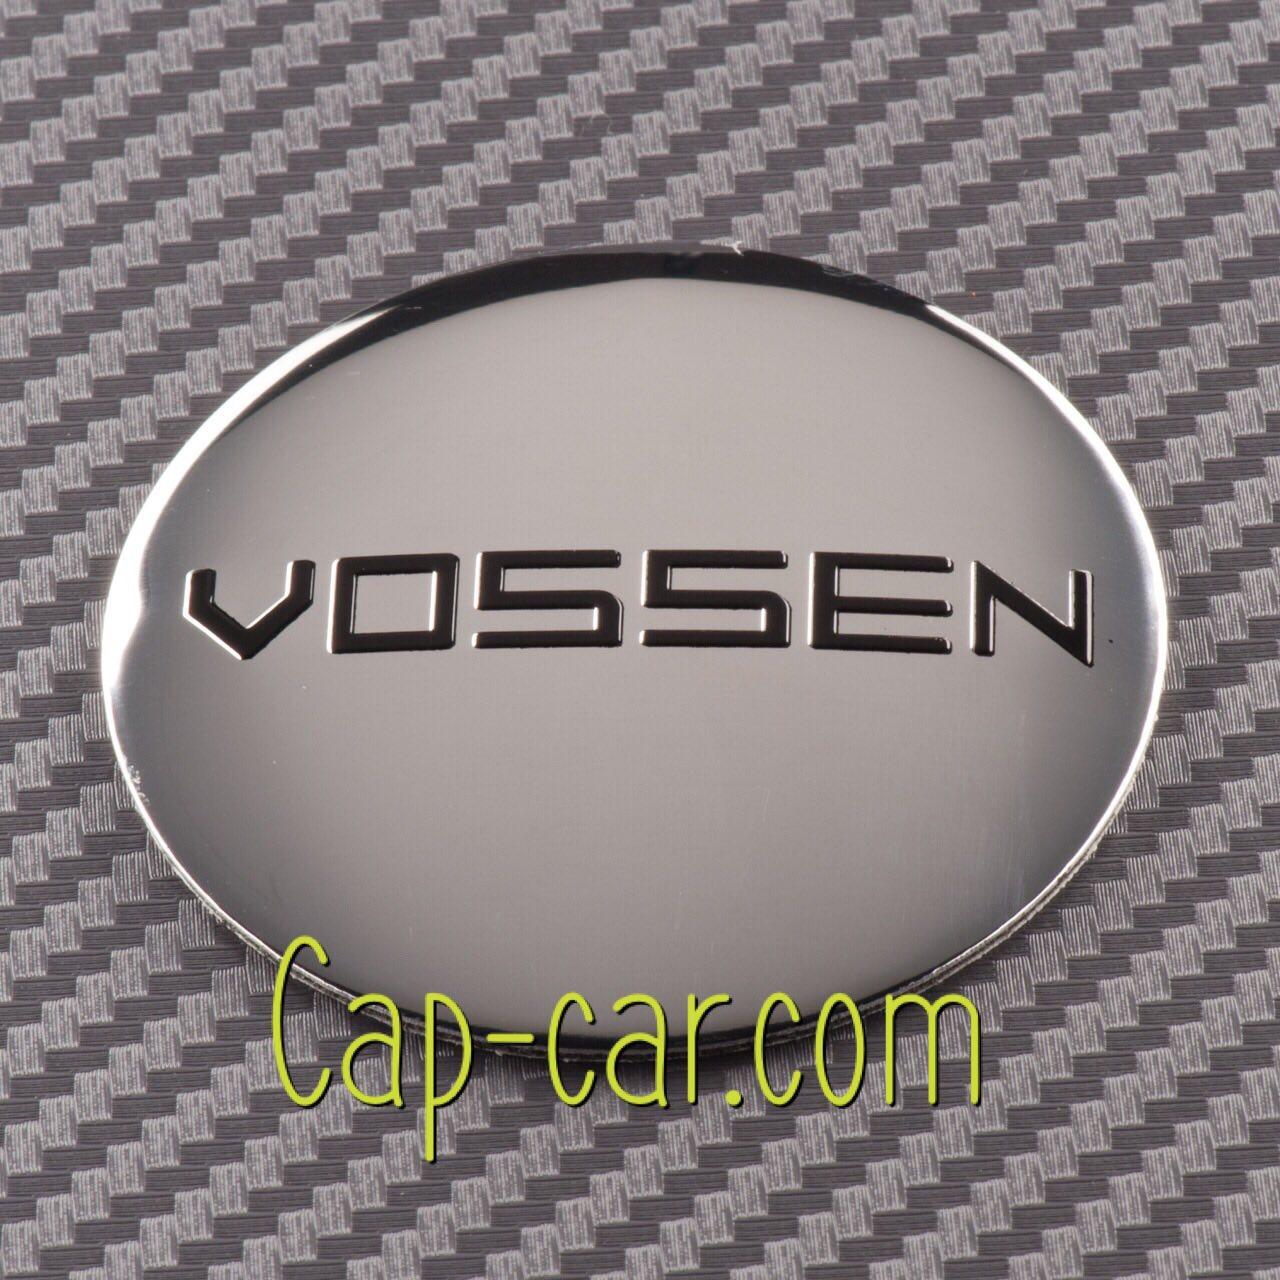 Наклейки для дисків з емблемою Vossen. ( Воссен ) Ціна вказана за комплект з 4-х штук